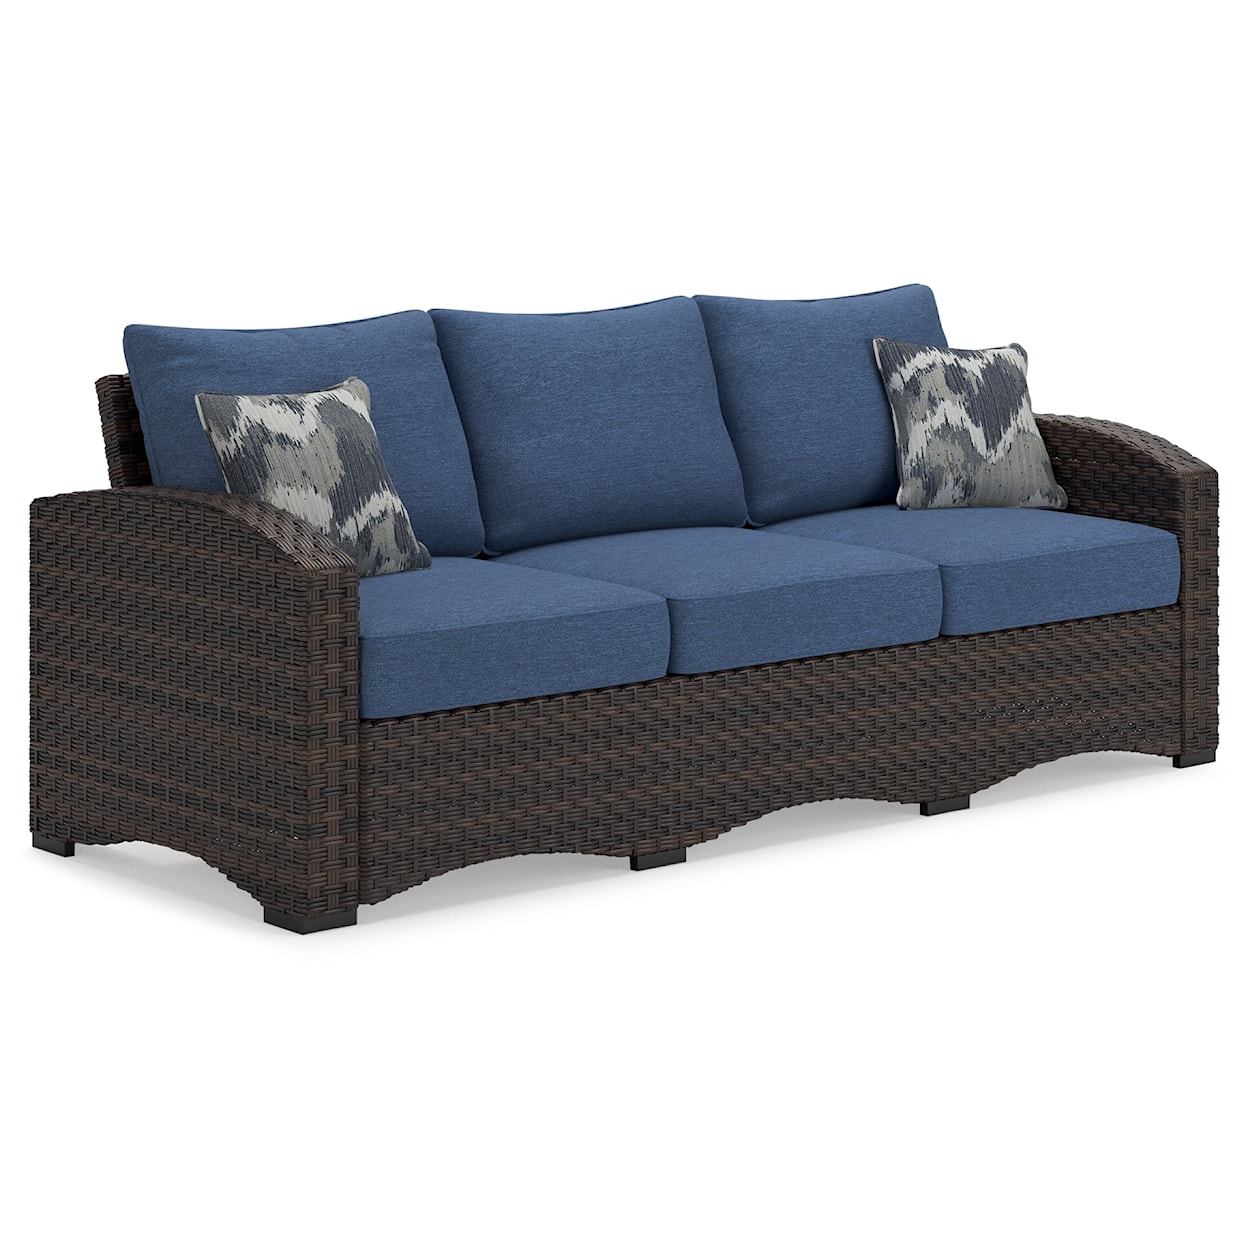 Ashley Furniture Signature Design Windglow Outdoor Sofa With Cushion